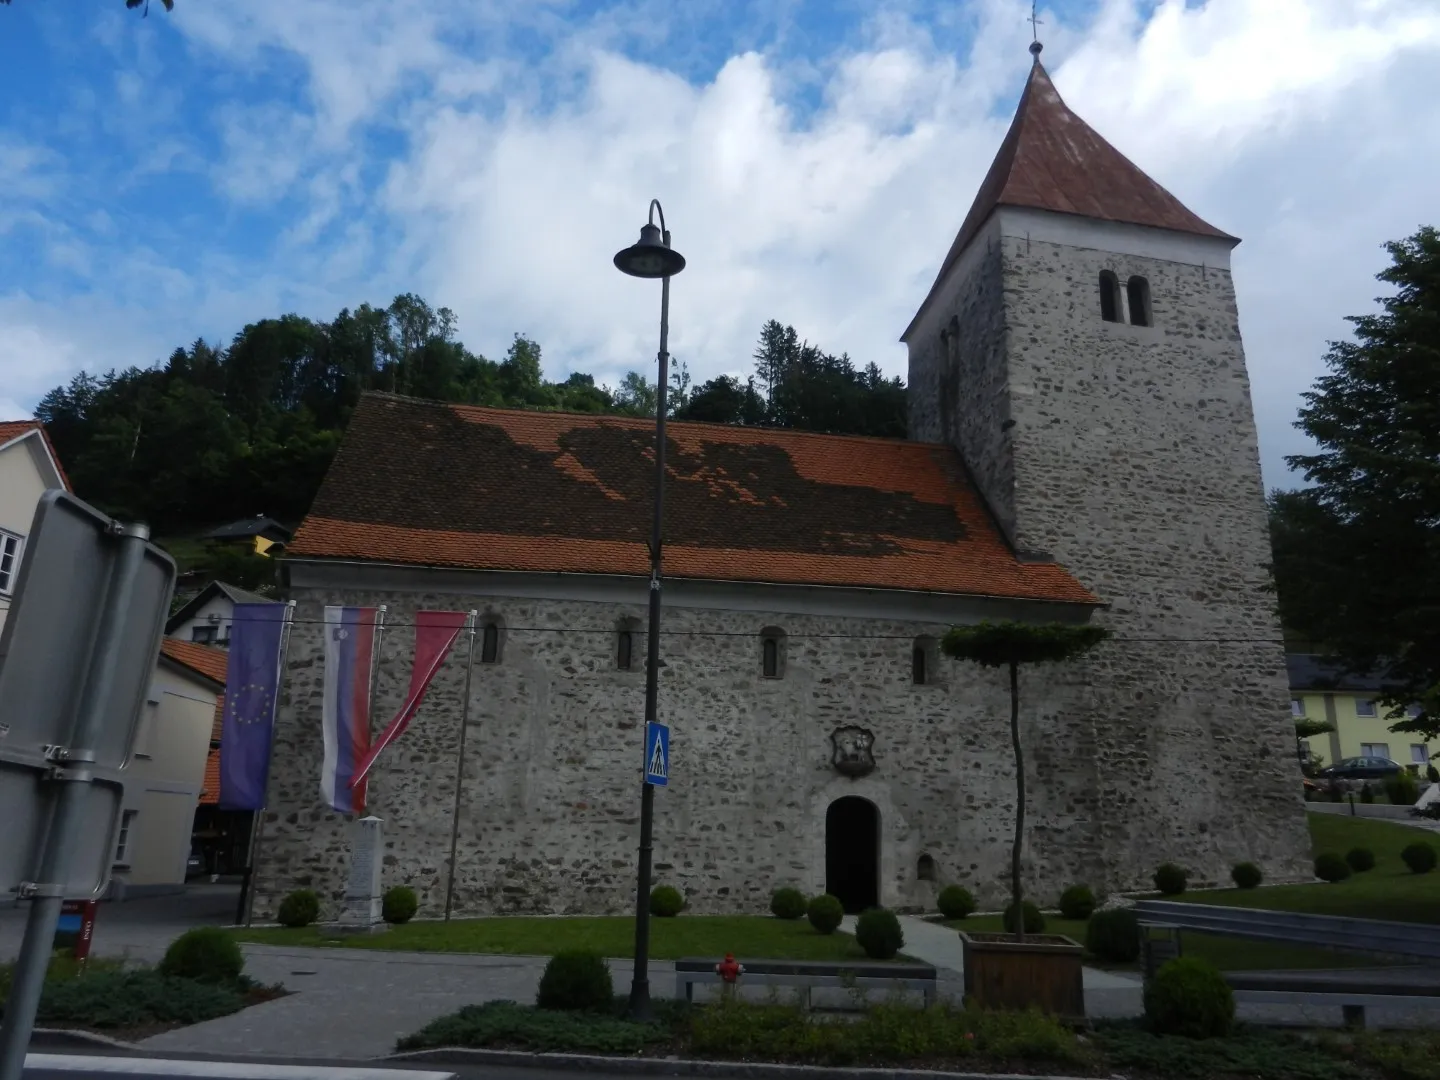 Imagen de Vzhodna Slovenija